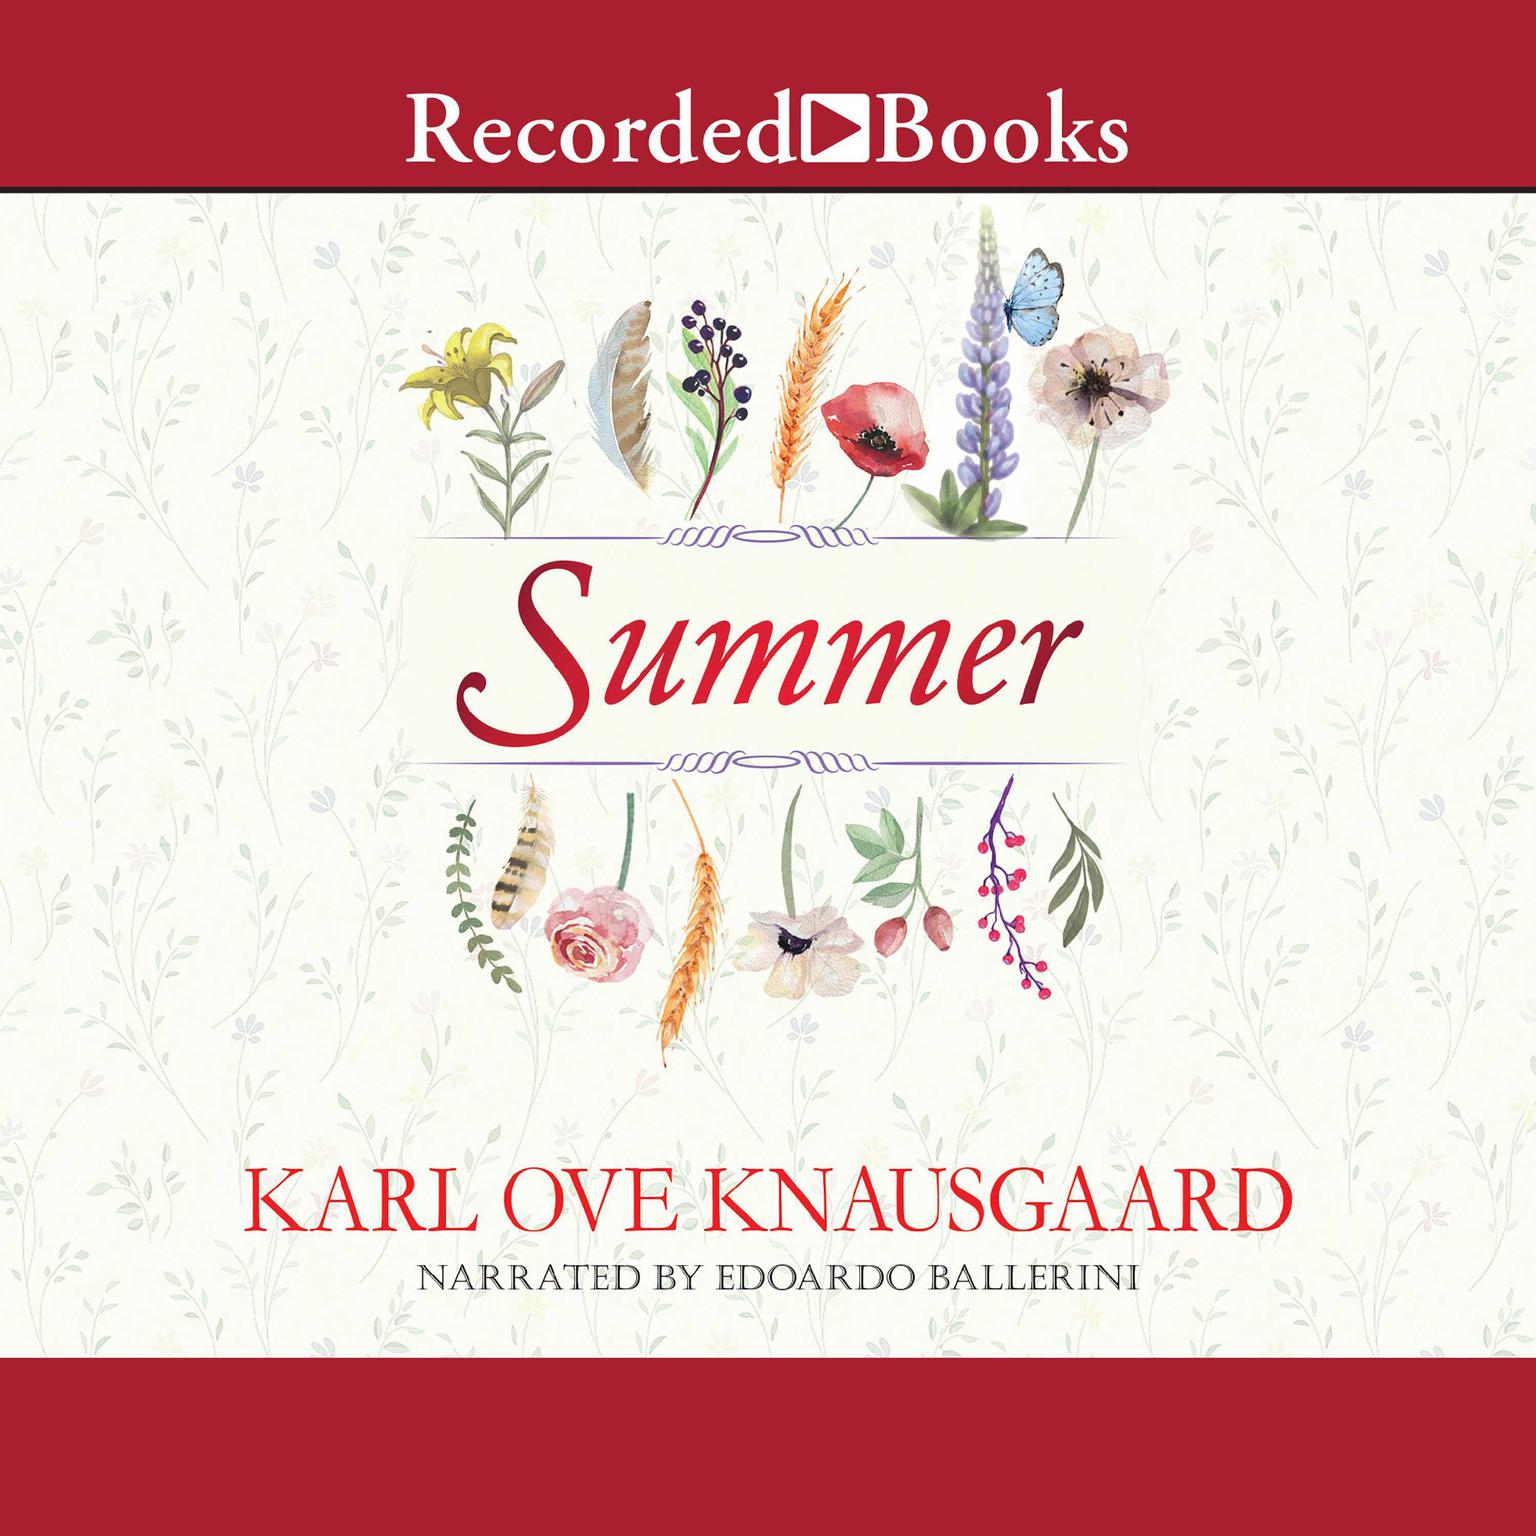 Summer Audiobook, by Karl Ove Knausgaard